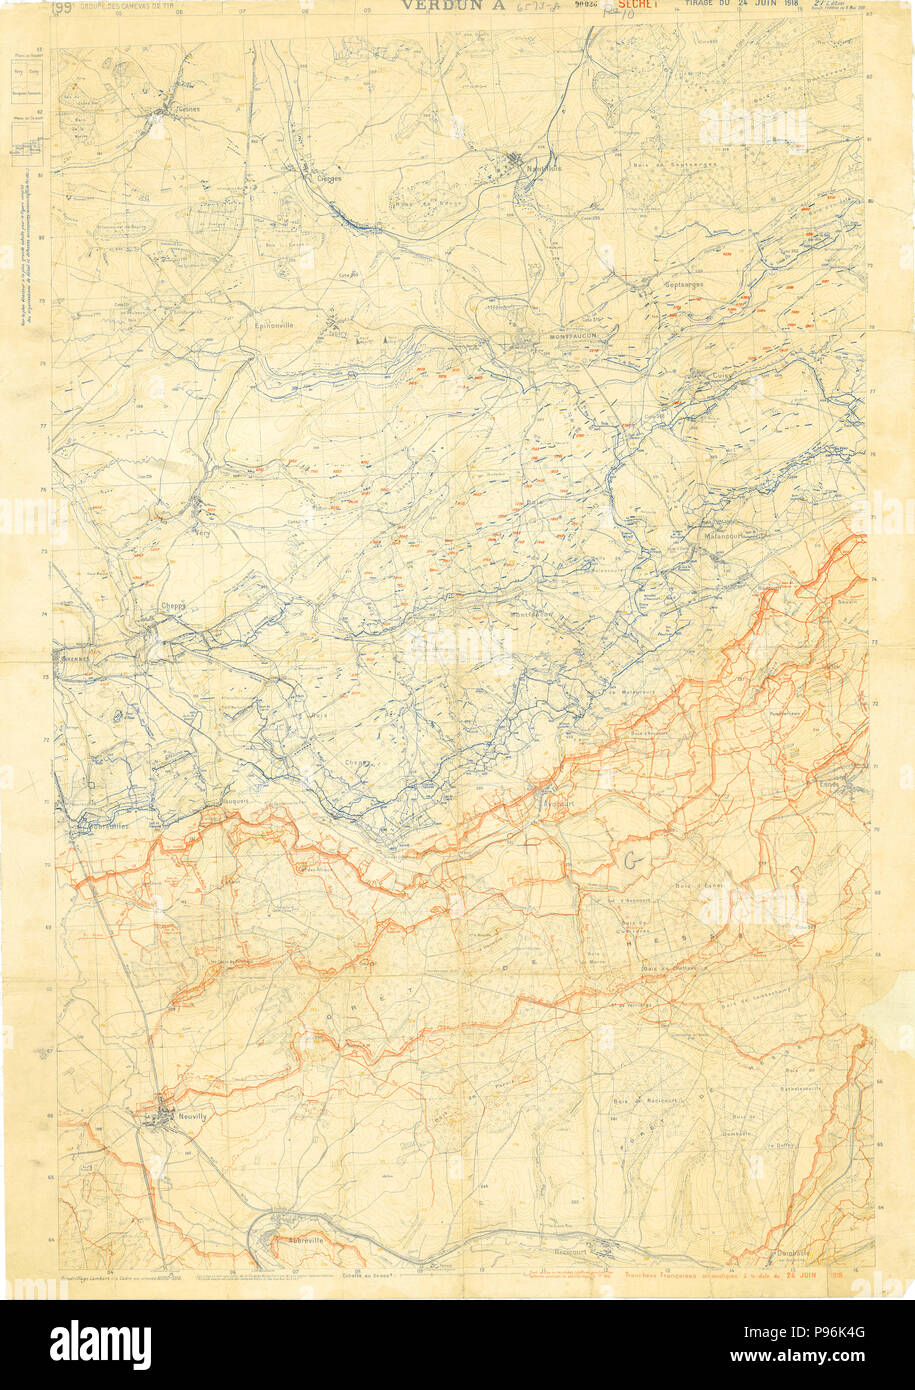 WW I Map - Verdun A Trench Map June 24, 1918 Stock Photo